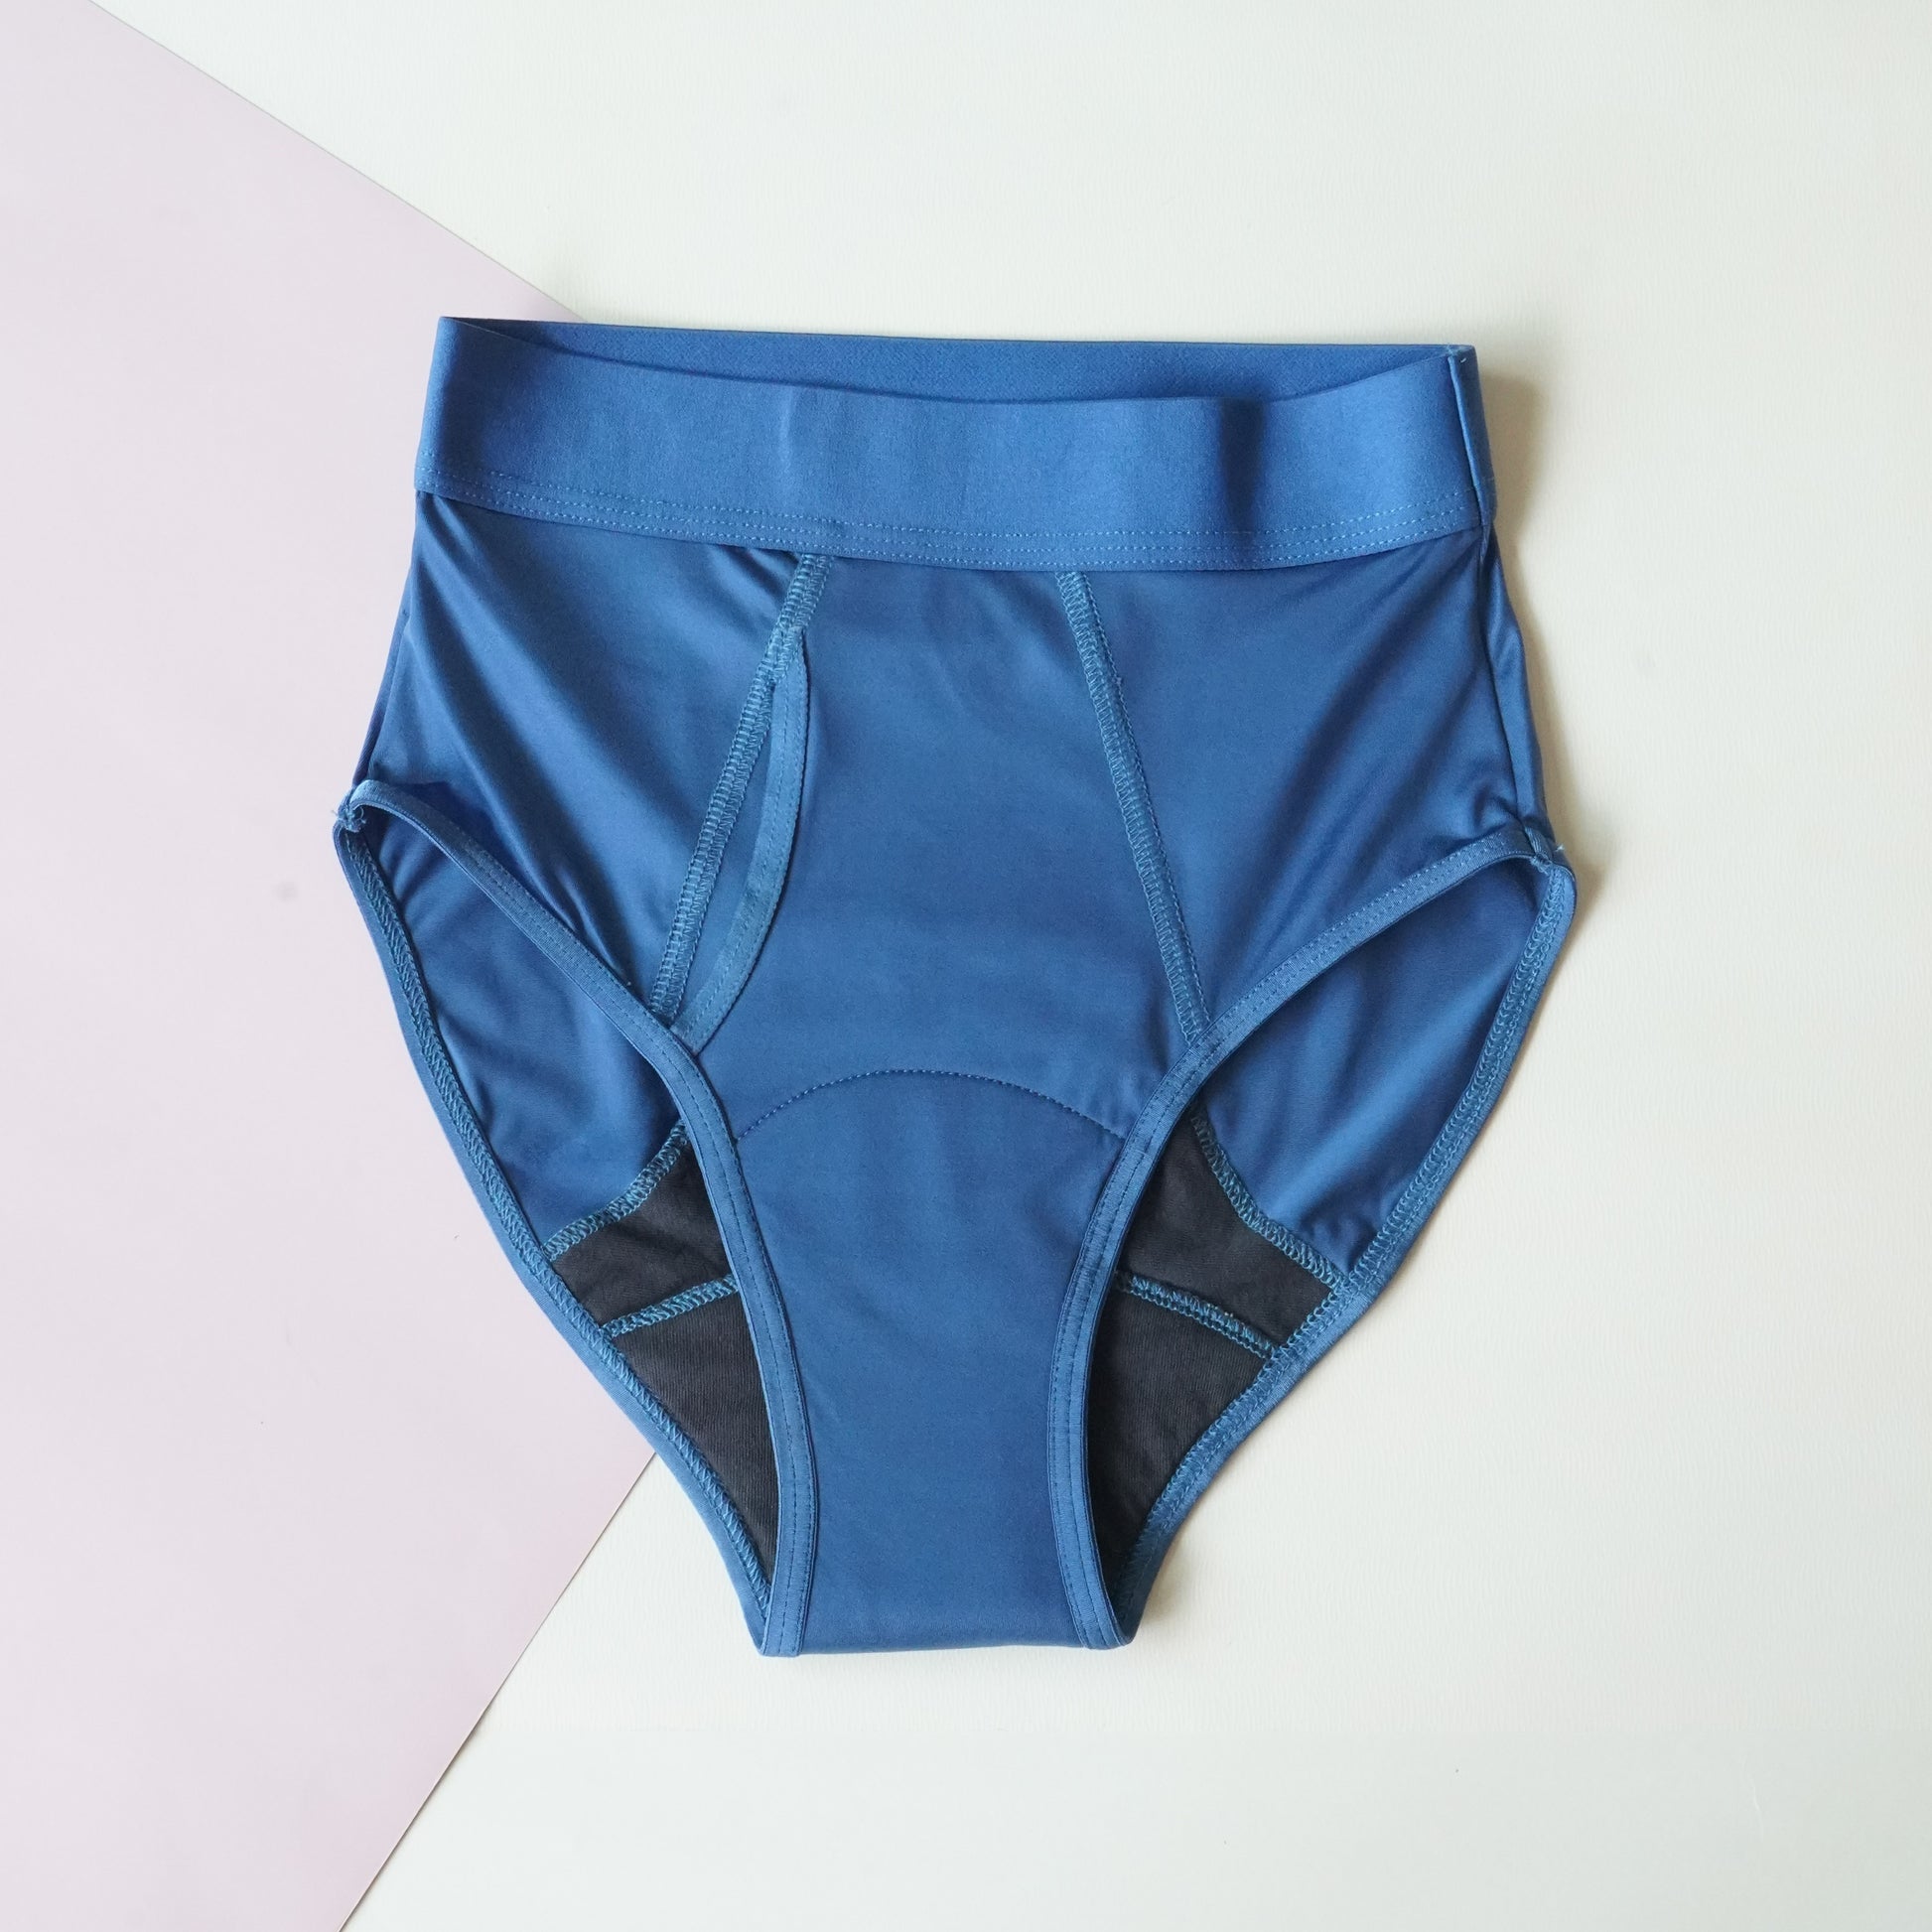 Disposable Underwear, Cotton Panties Elastic Breathable Refreshing